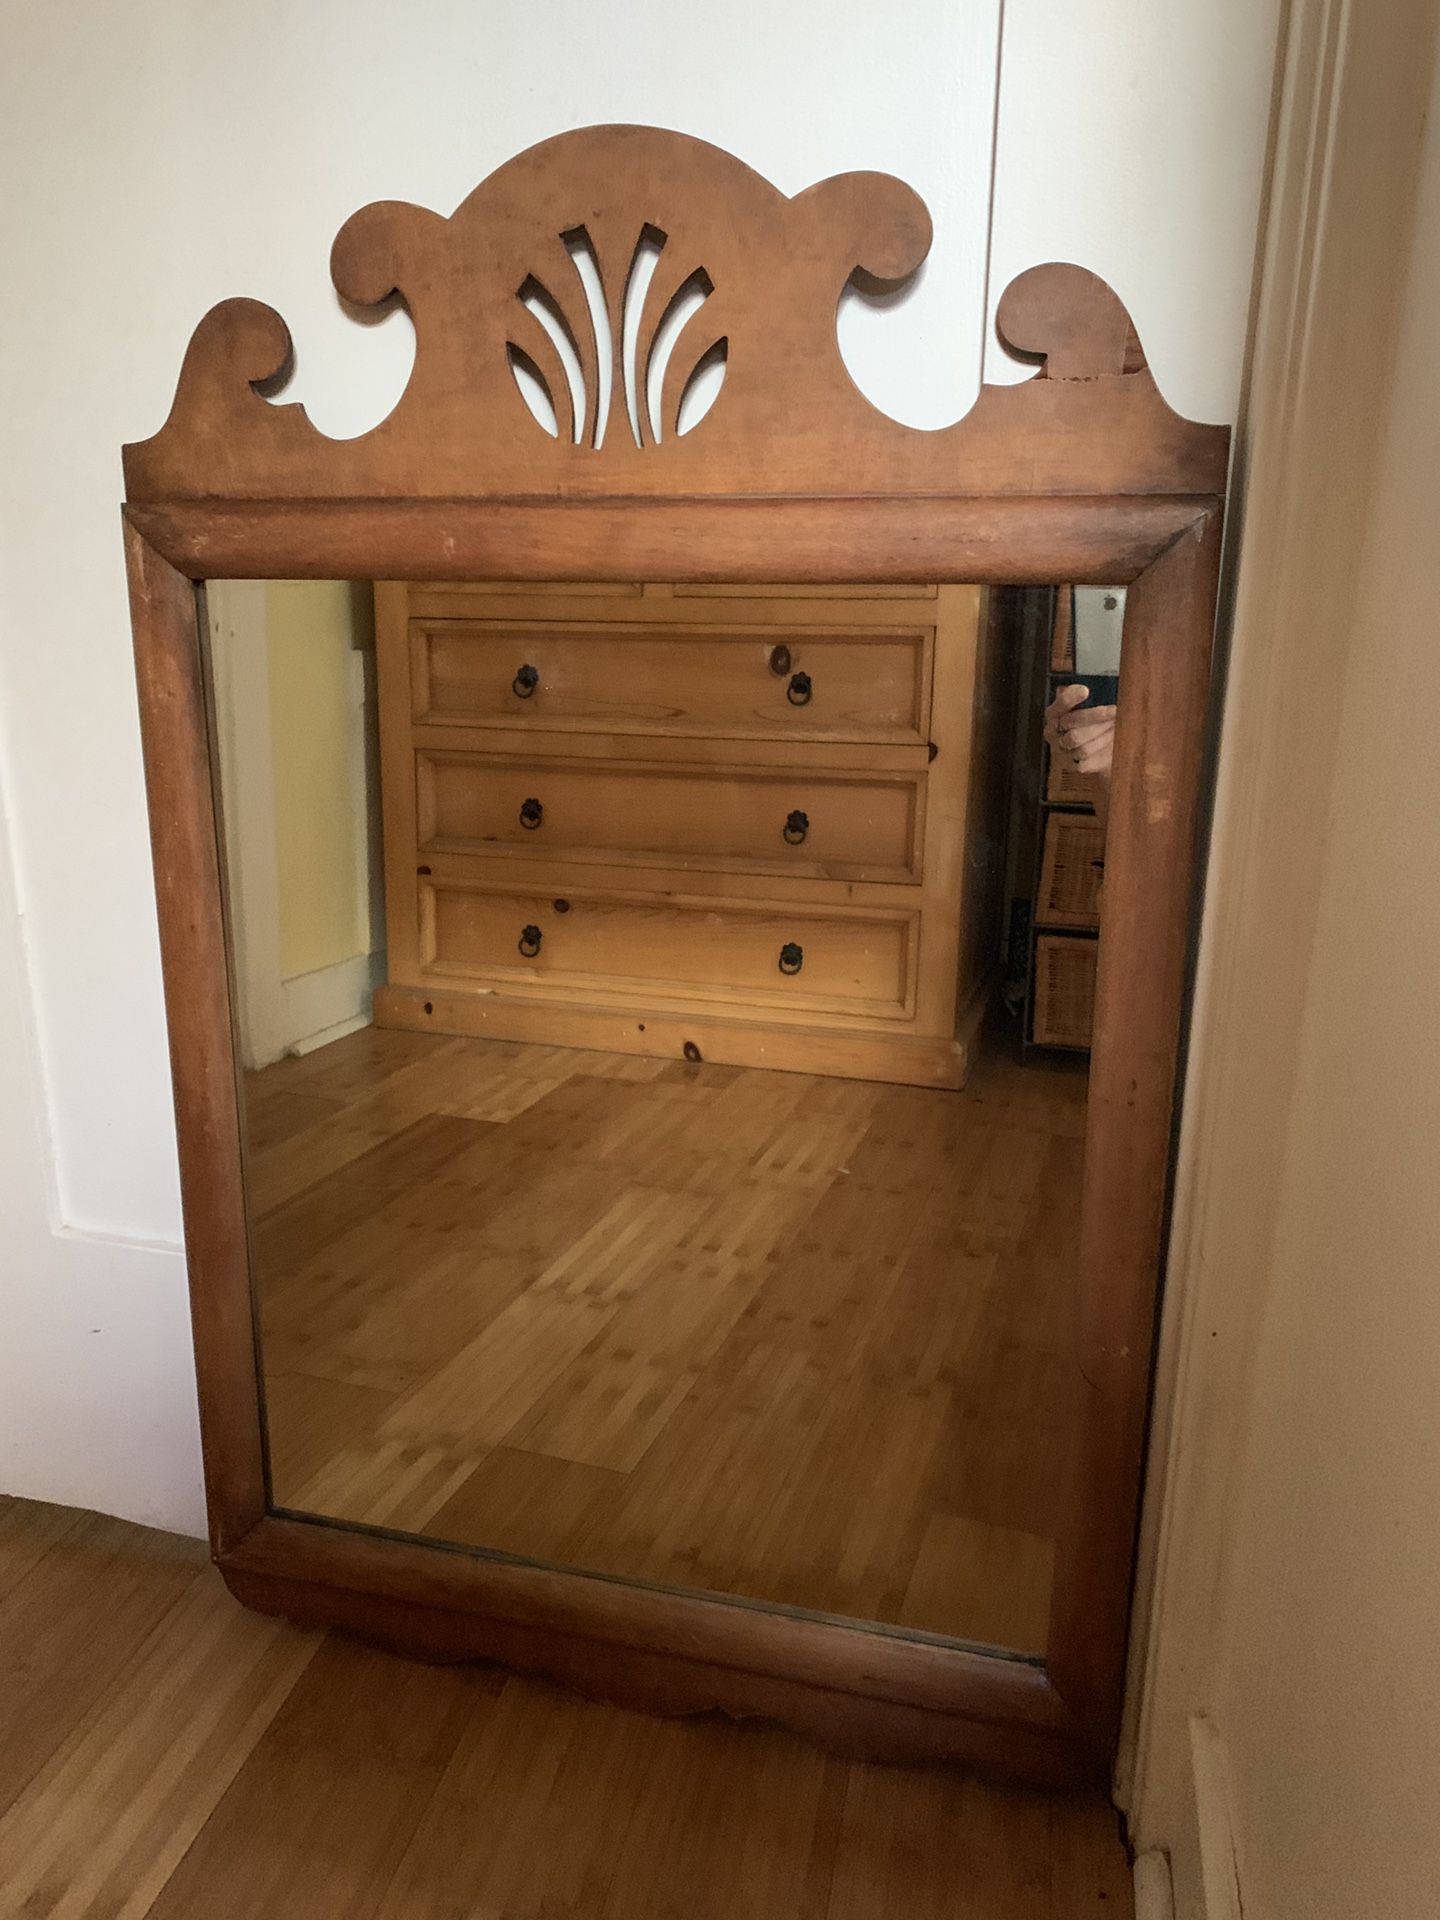 Lovely decorative antique mirror